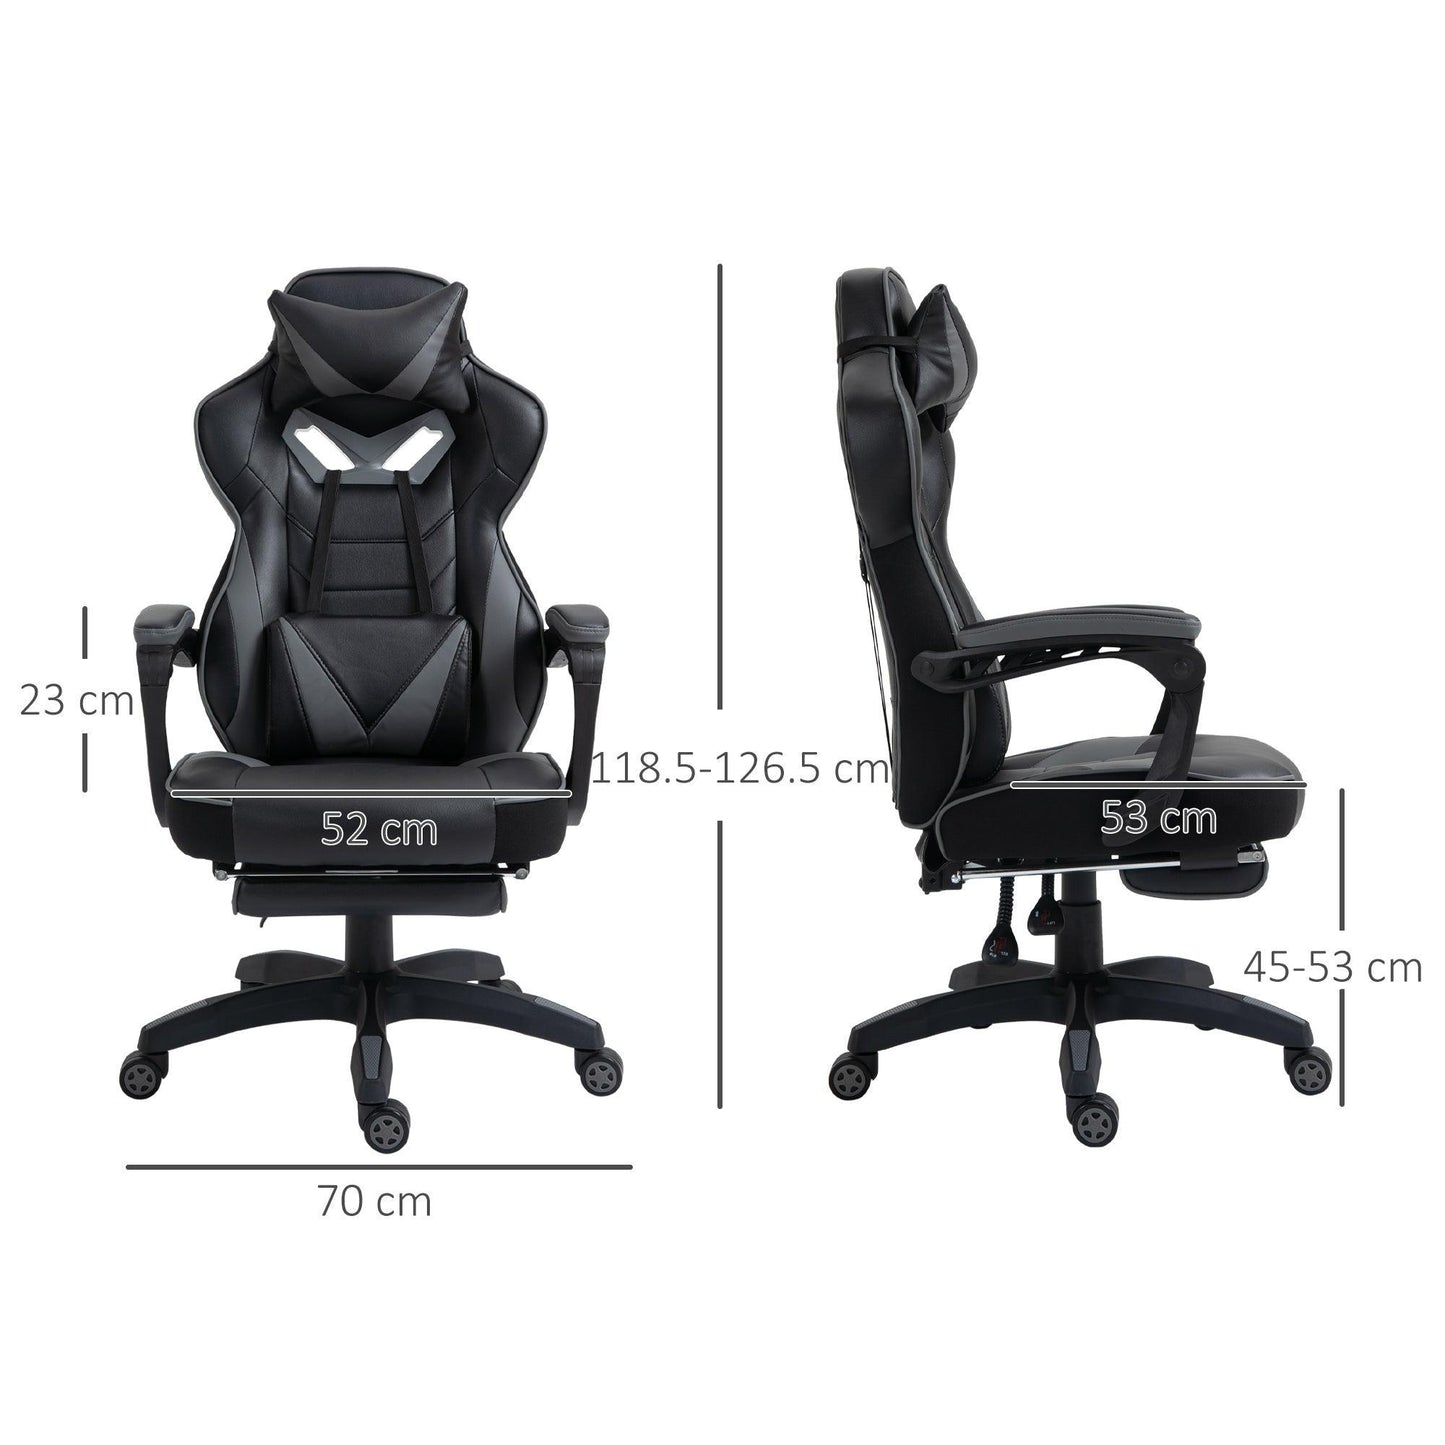 Vinsetto Gaming Chair: Adjustable Height, Lumbar Support, Grey - ALL4U RETAILER LTD